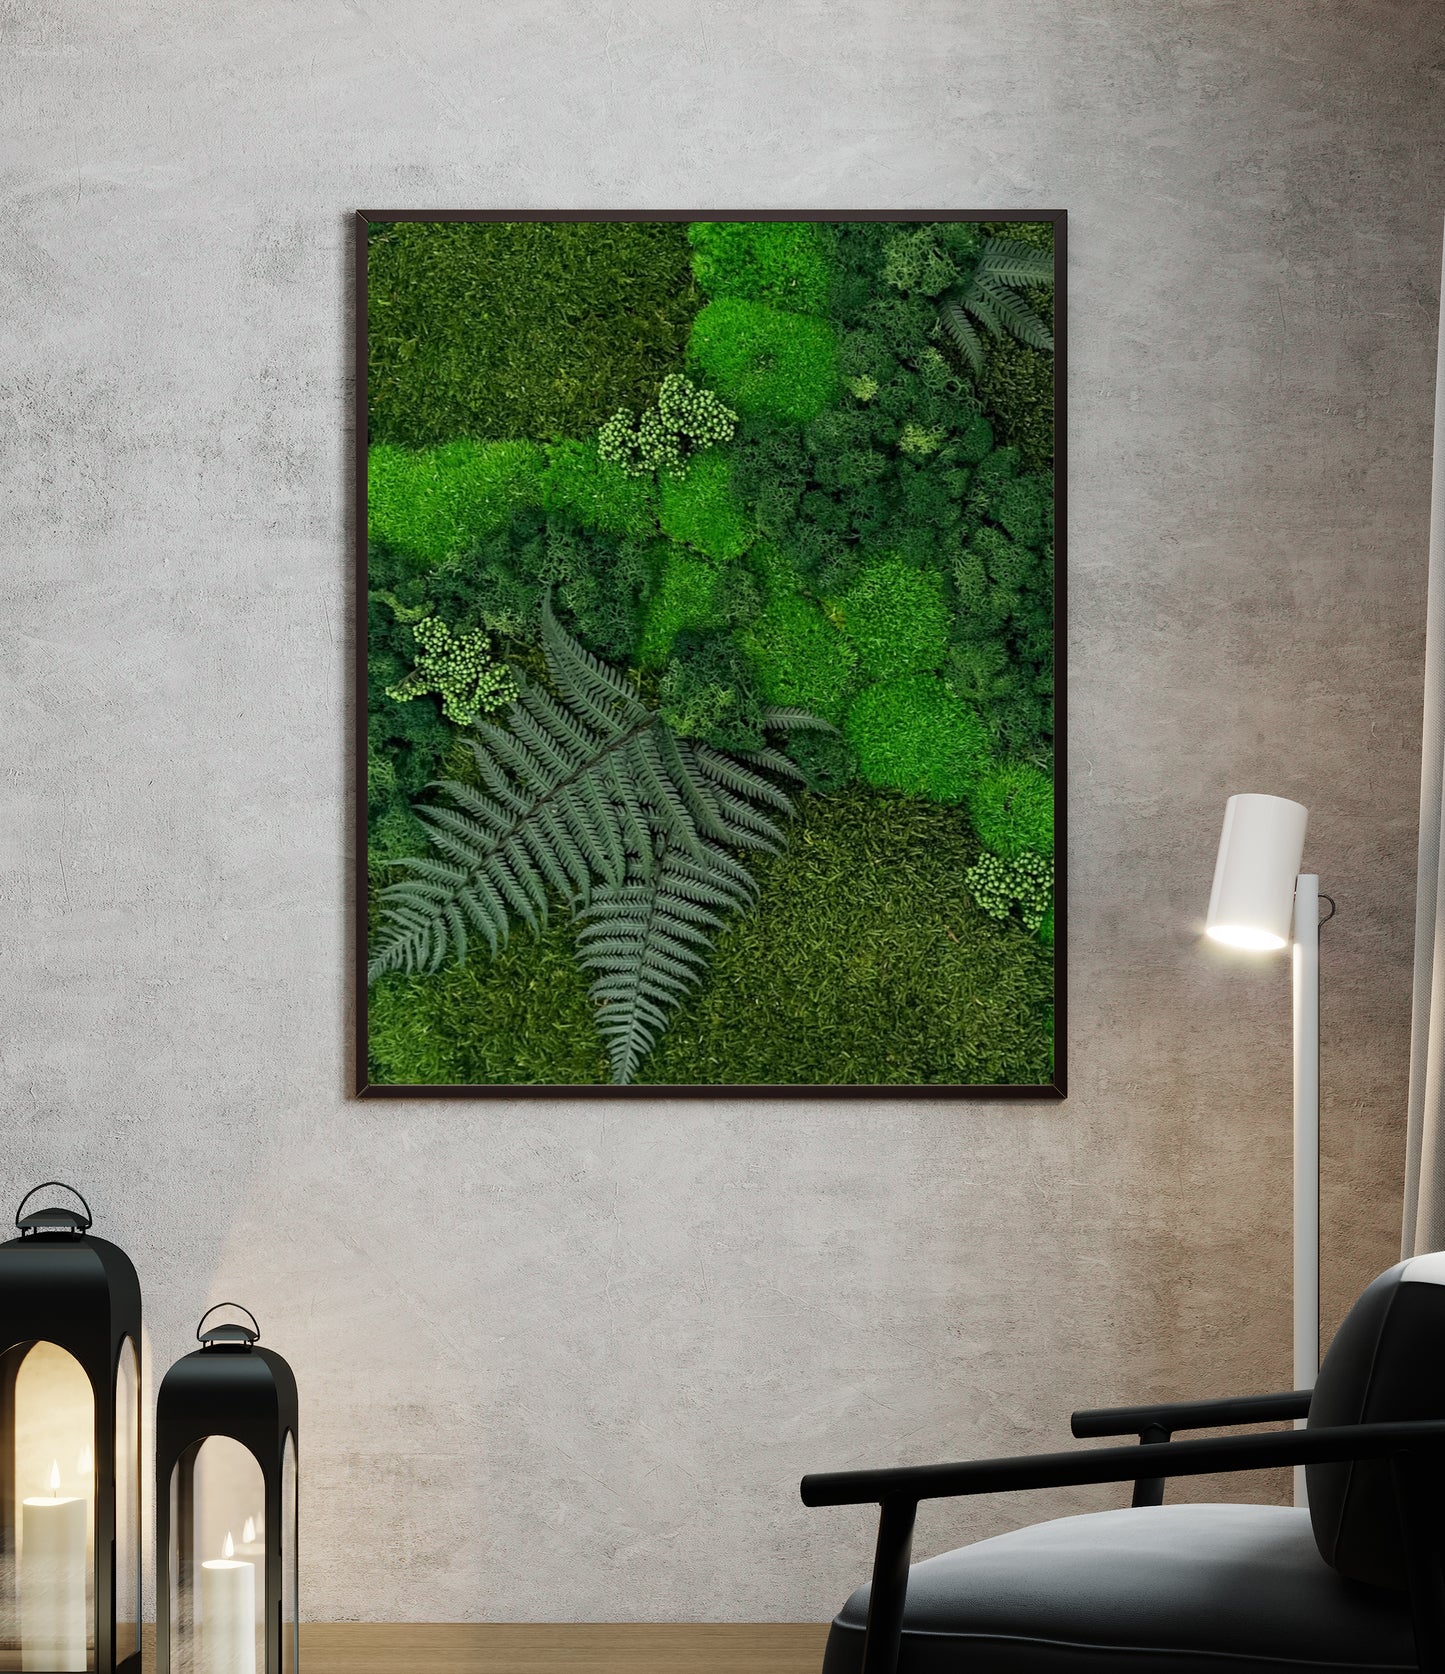 Combination Framed Moss Wall Art with Ferns